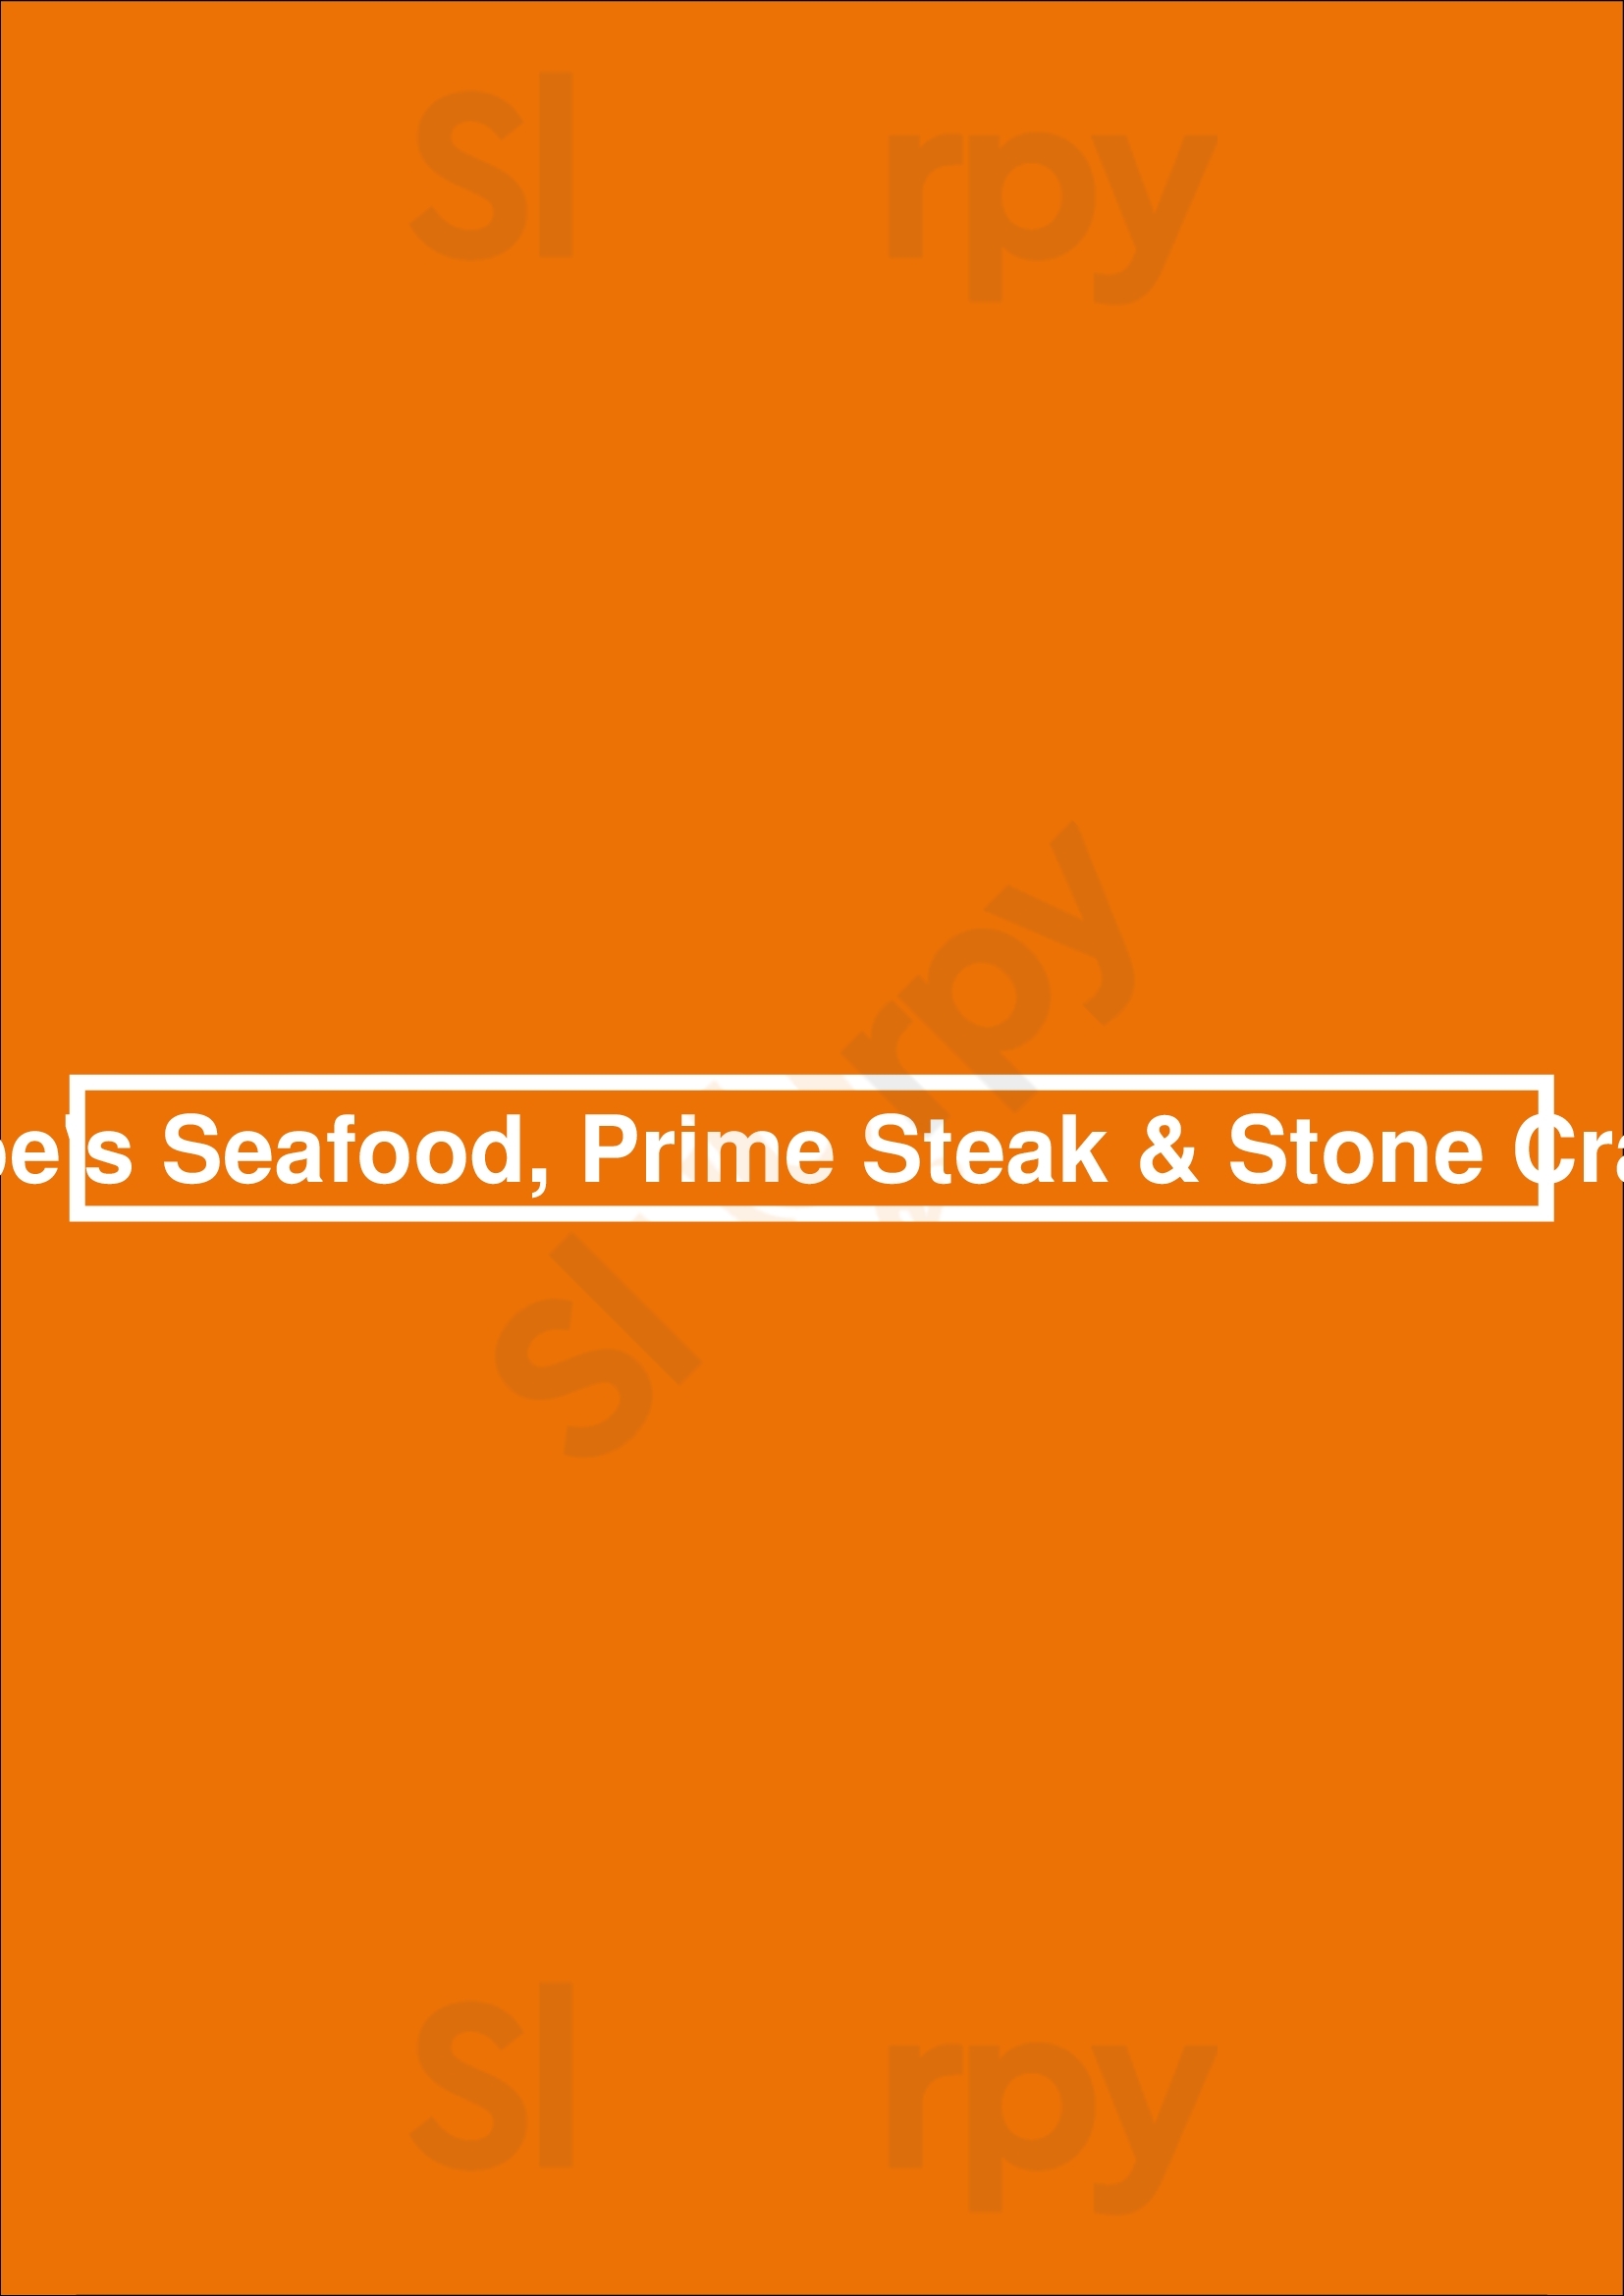 Joe's Seafood, Prime Steak & Stone Crab Chicago Menu - 1